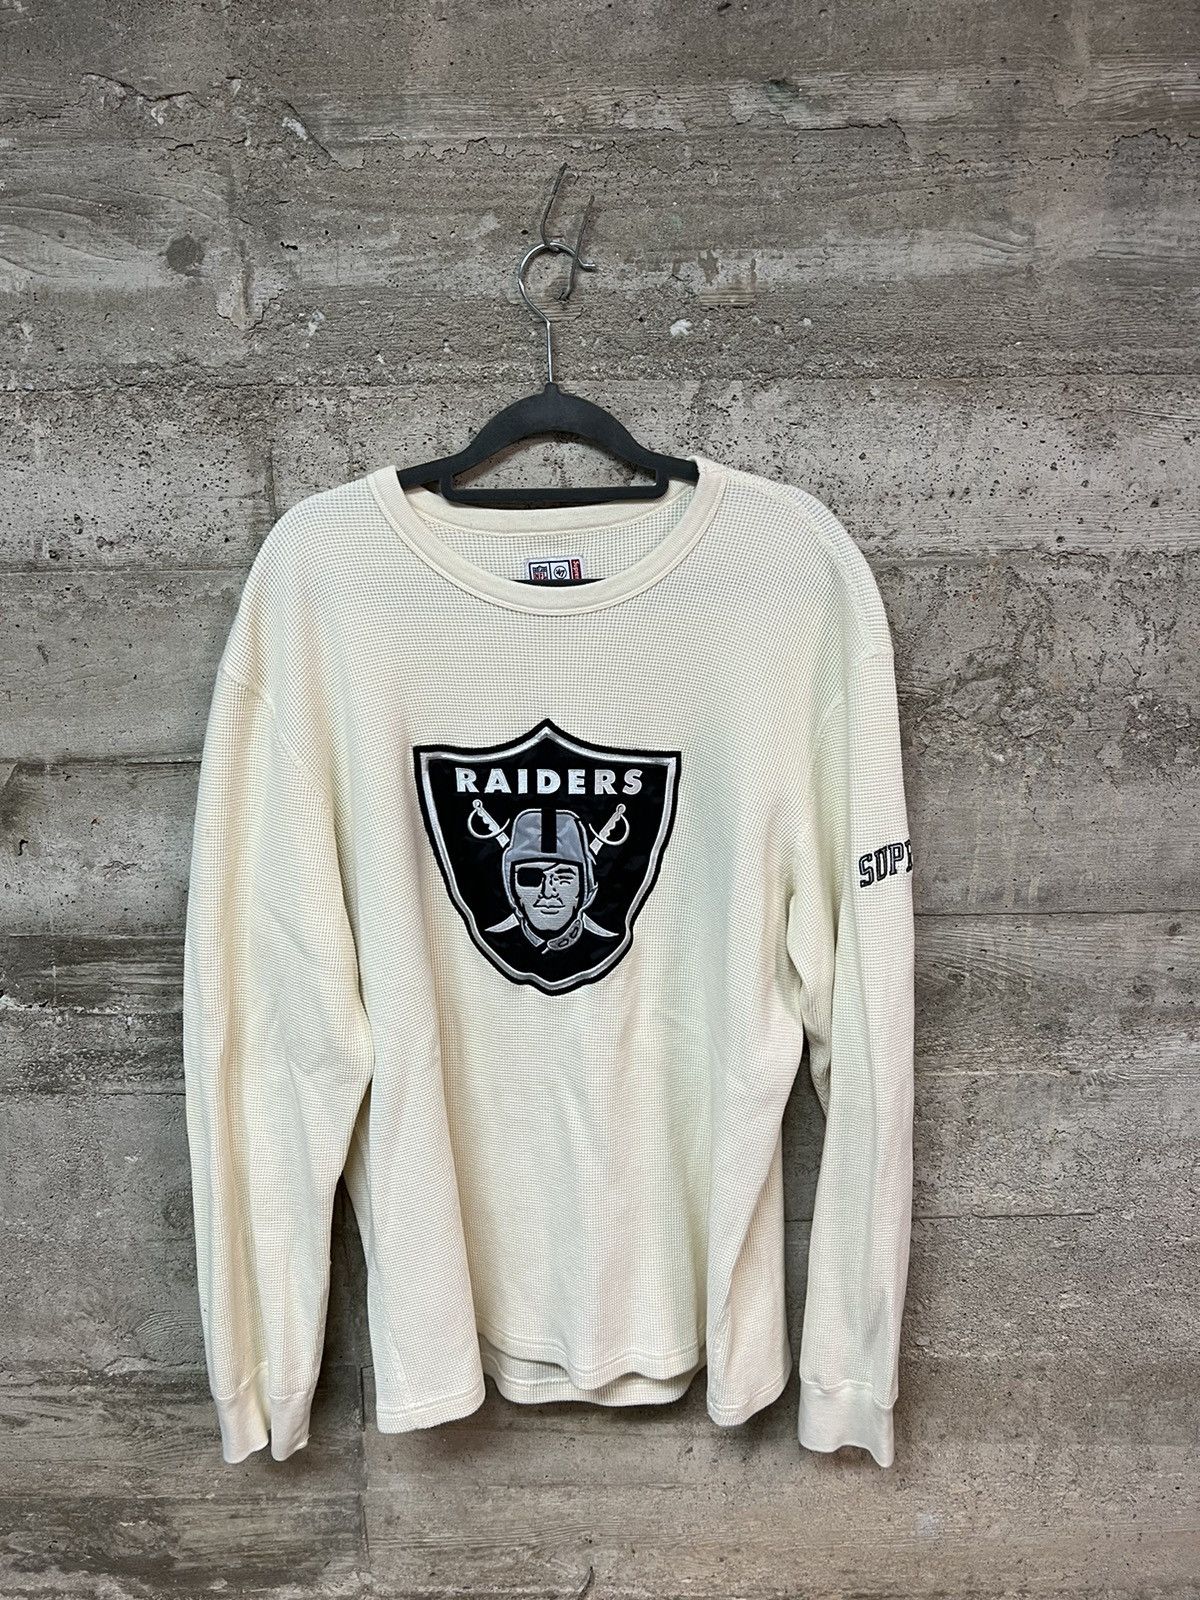 Supreme Supreme x NFL Raiders Waffle Knit Thermal Long Sleeve | Grailed